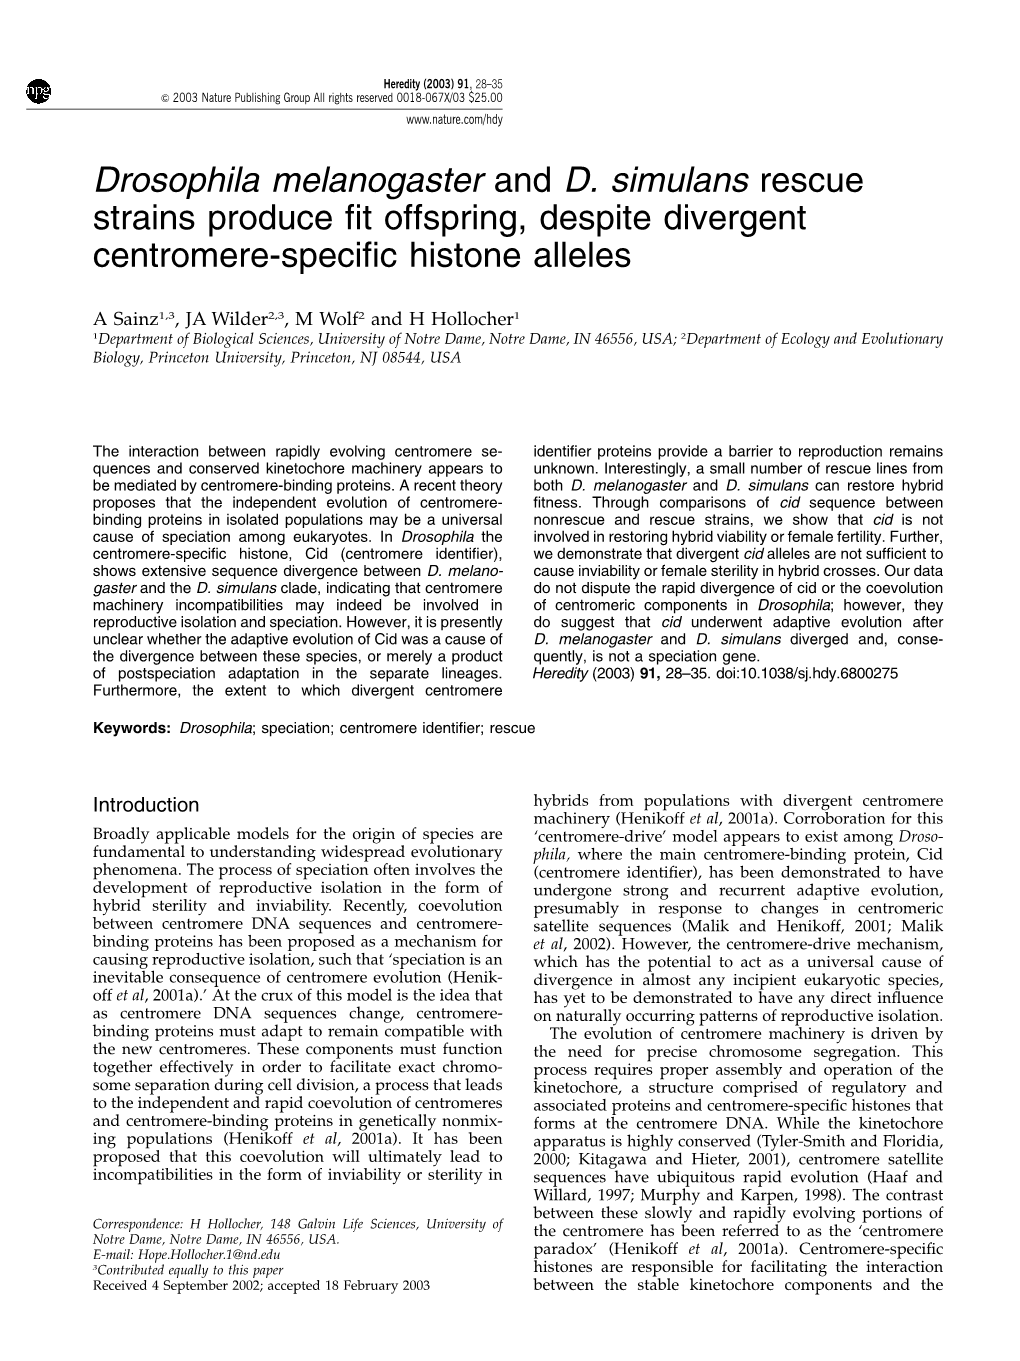 Drosophila Melanogaster and D. Simulans Rescue Strains Produce Fit